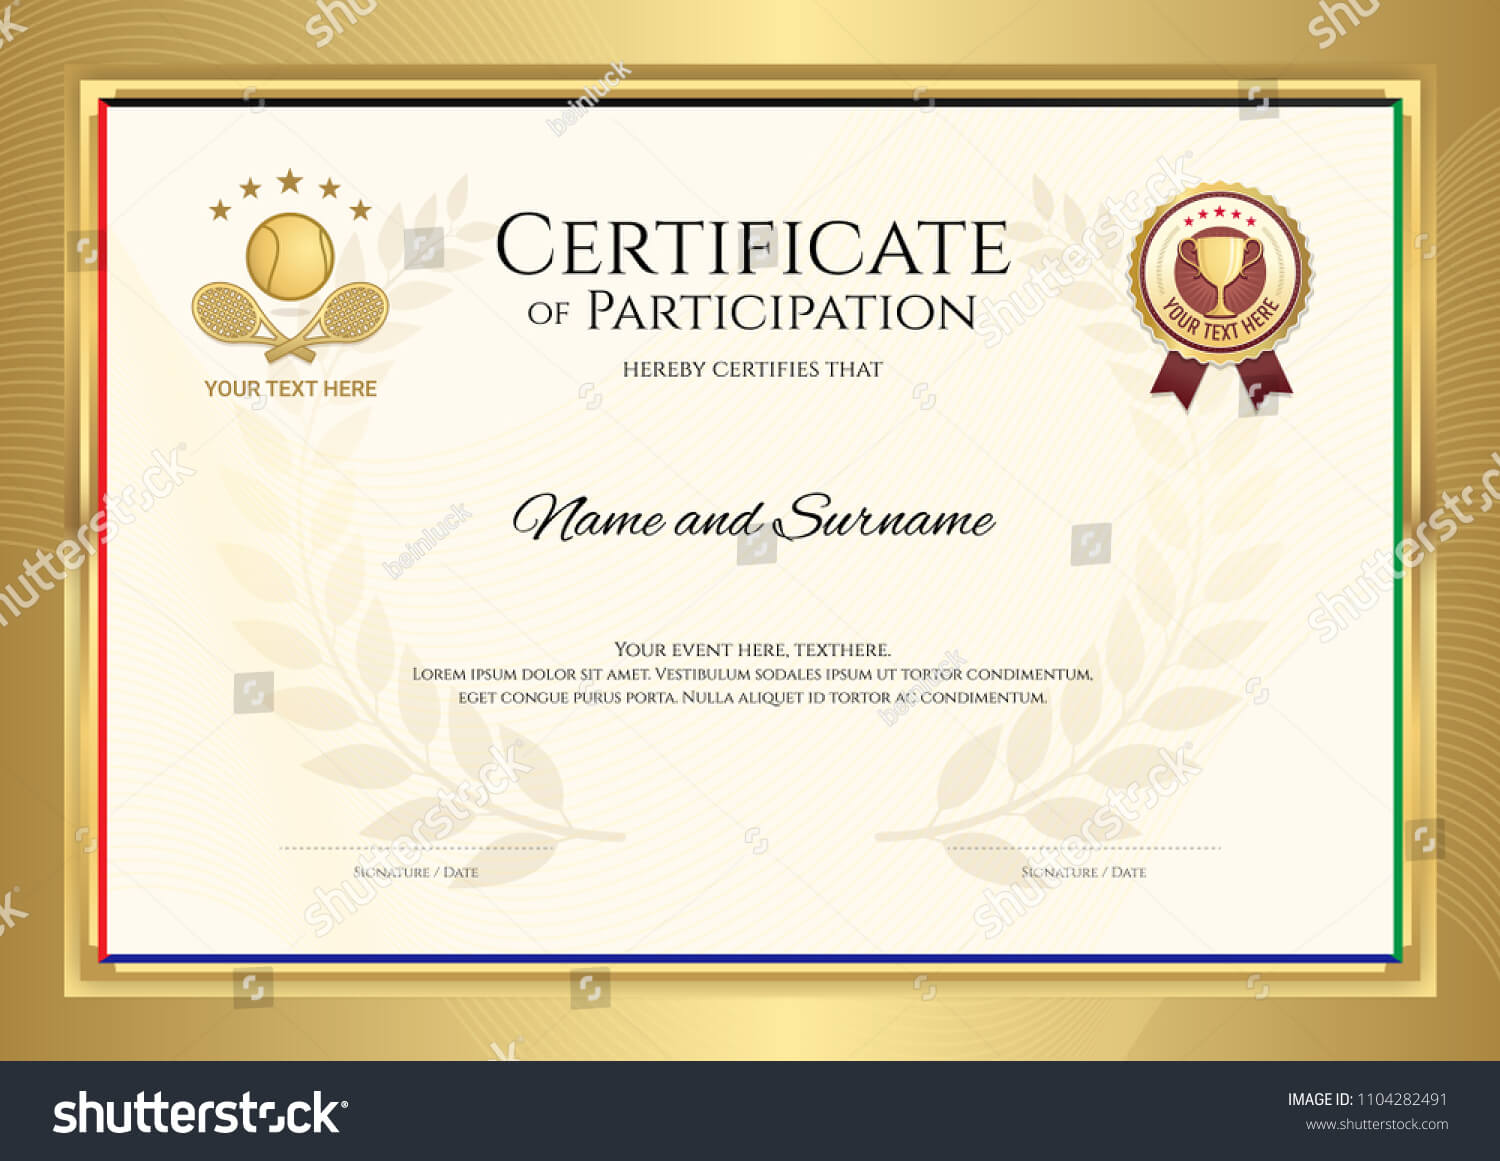 Certificate Template Tennis Sport Theme Gold Stock Image Within Tennis Certificate Template Free